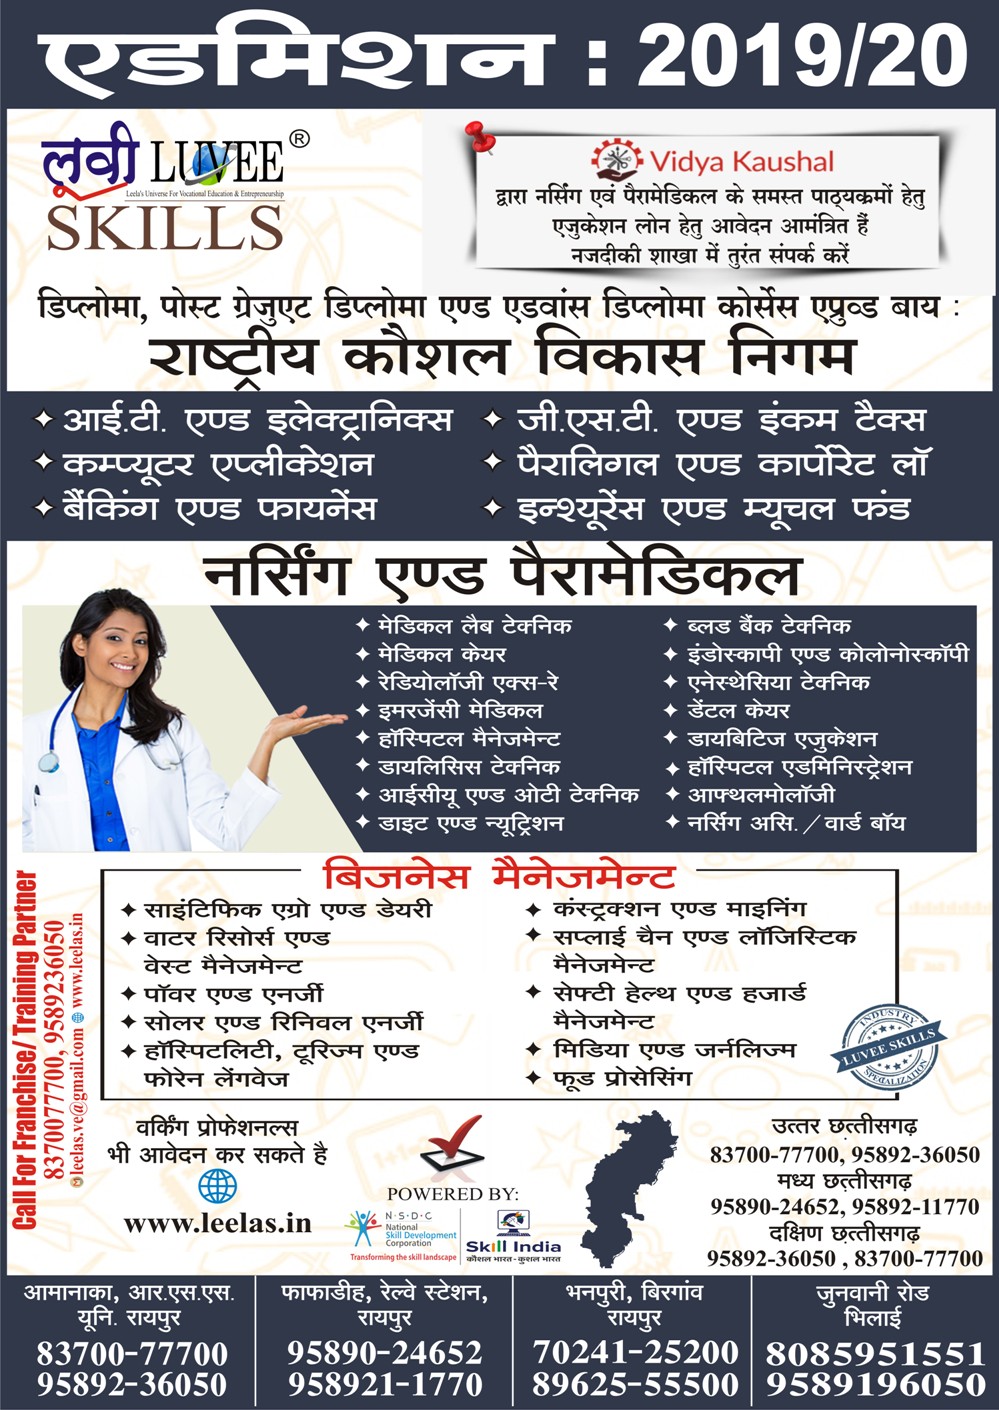 Admission Advertisement with Vidya Koushal - Education Loan Facility